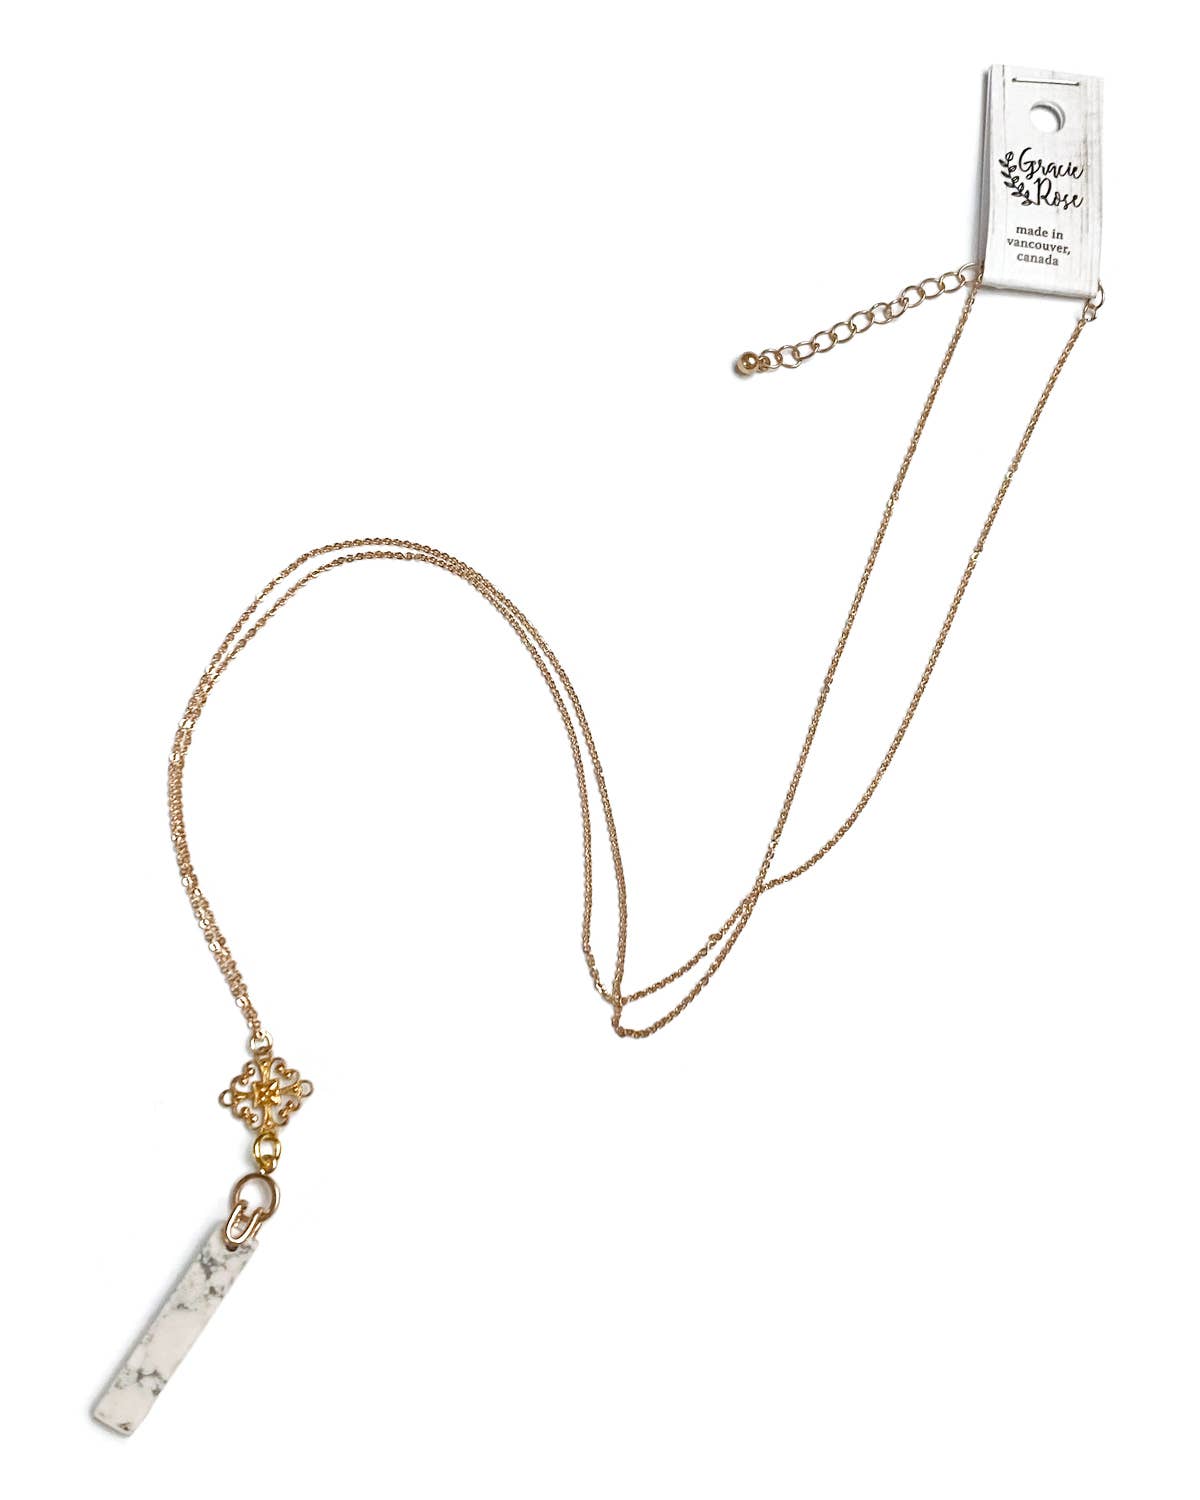 Gracie Rose Designs - Matte Gold Filigree White Howlite Pendant Necklace